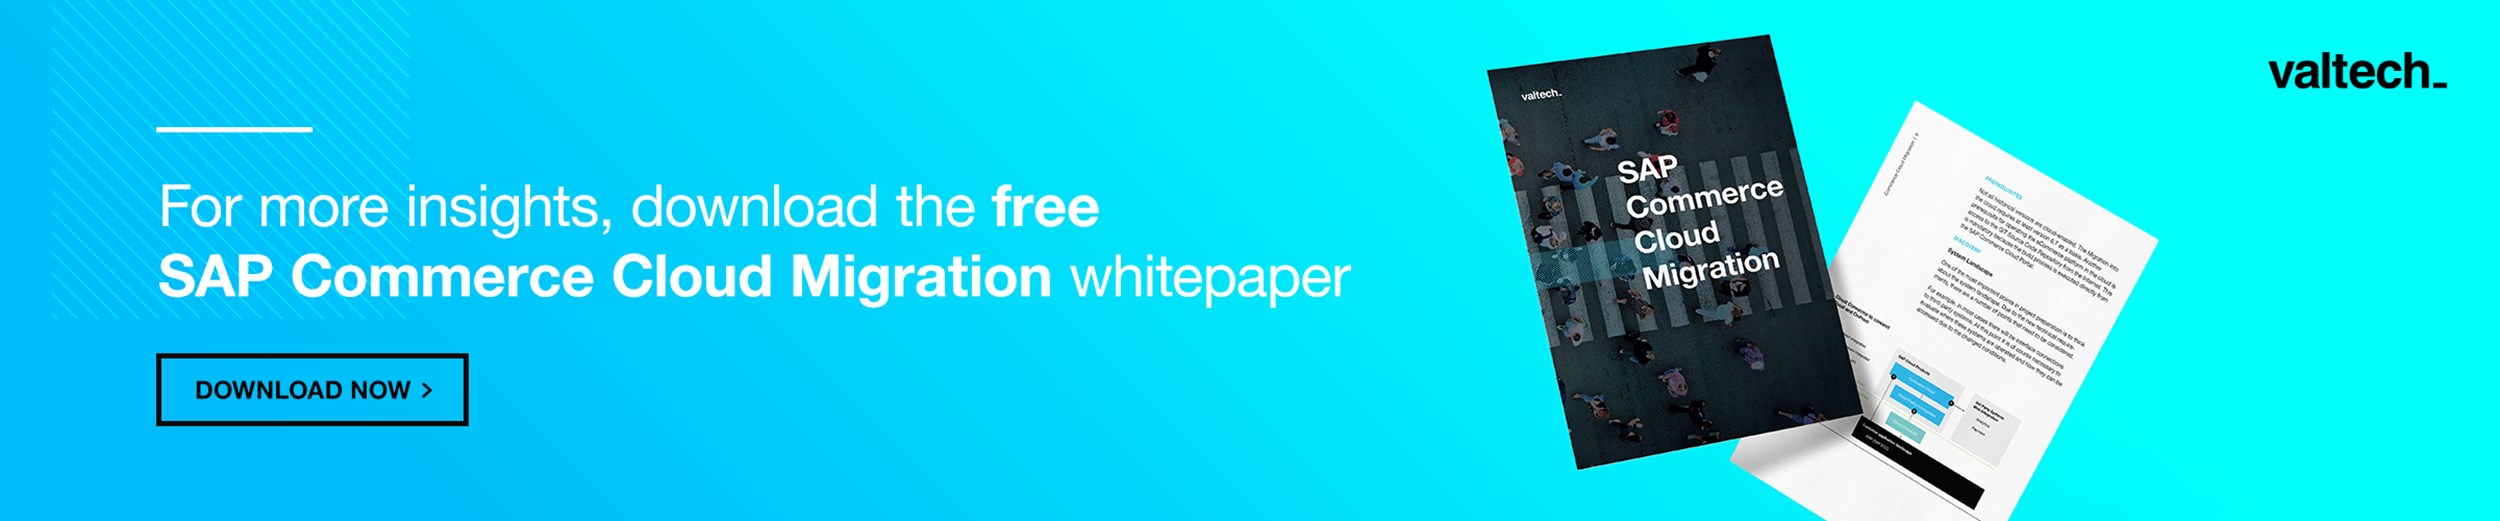 SAP-Whitepaper-Blog-Ad.png